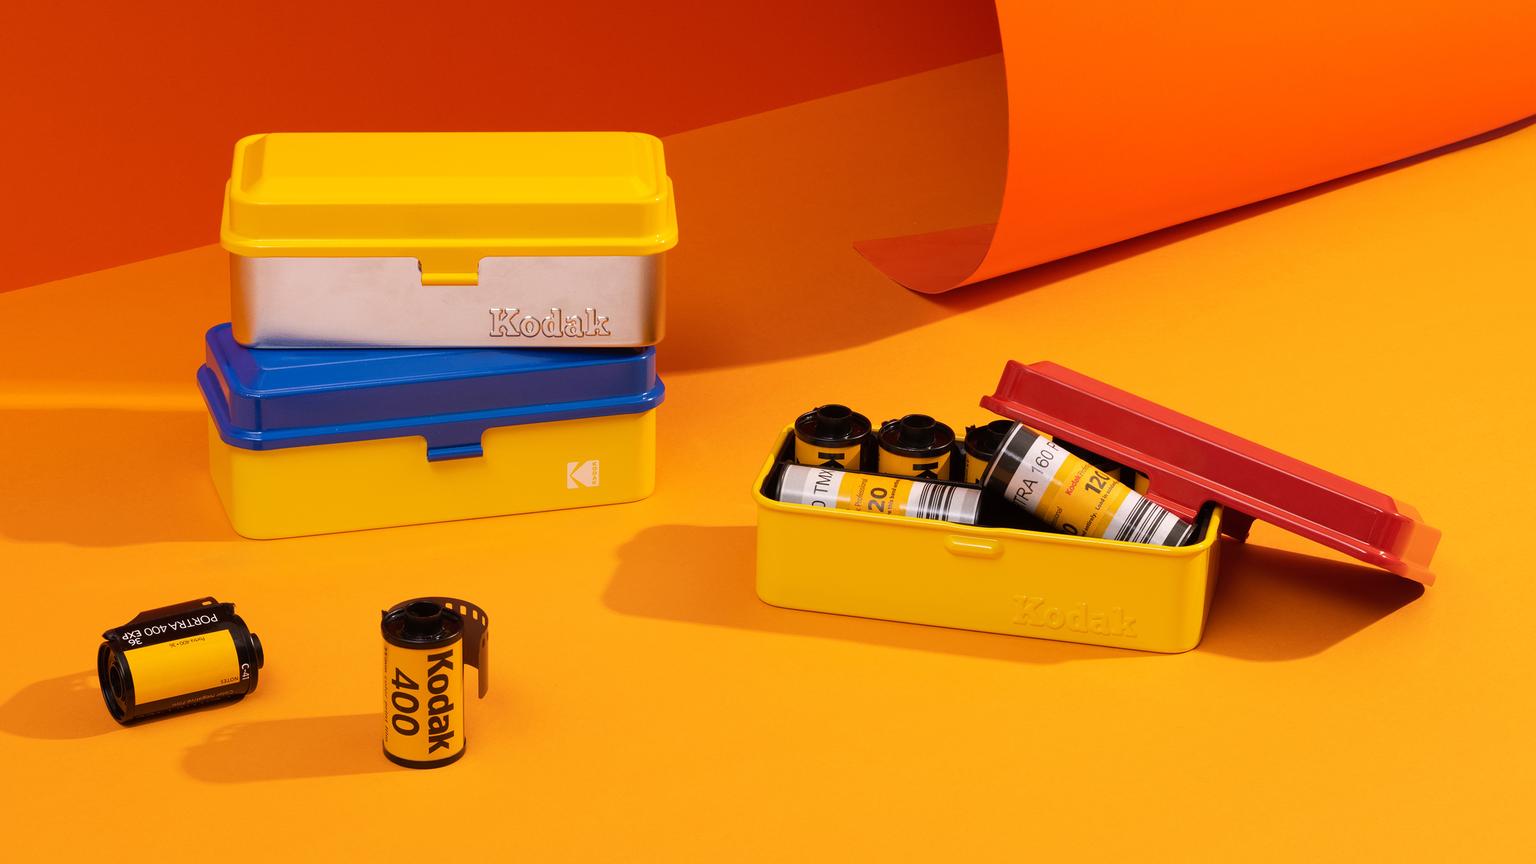 Kodak vs. Fujifilm  Two Popular Film Brands, But Which Is… - Moment